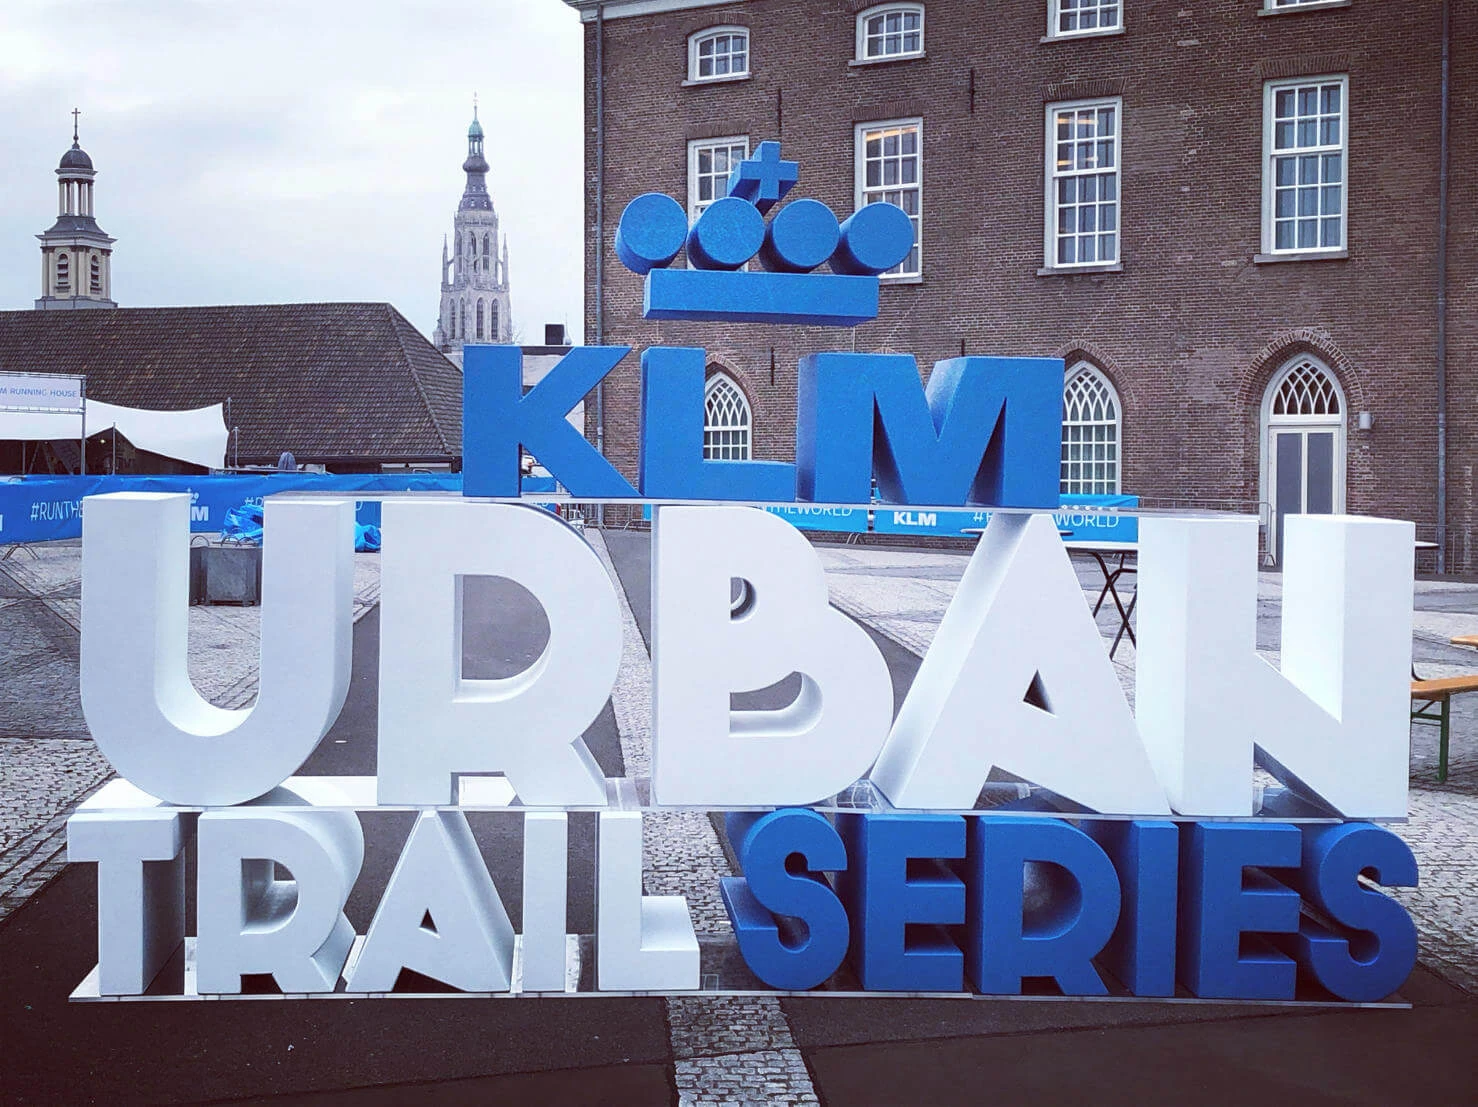 KLM URBAN TRAIL SERIES in piepschuim letters weergegeven.